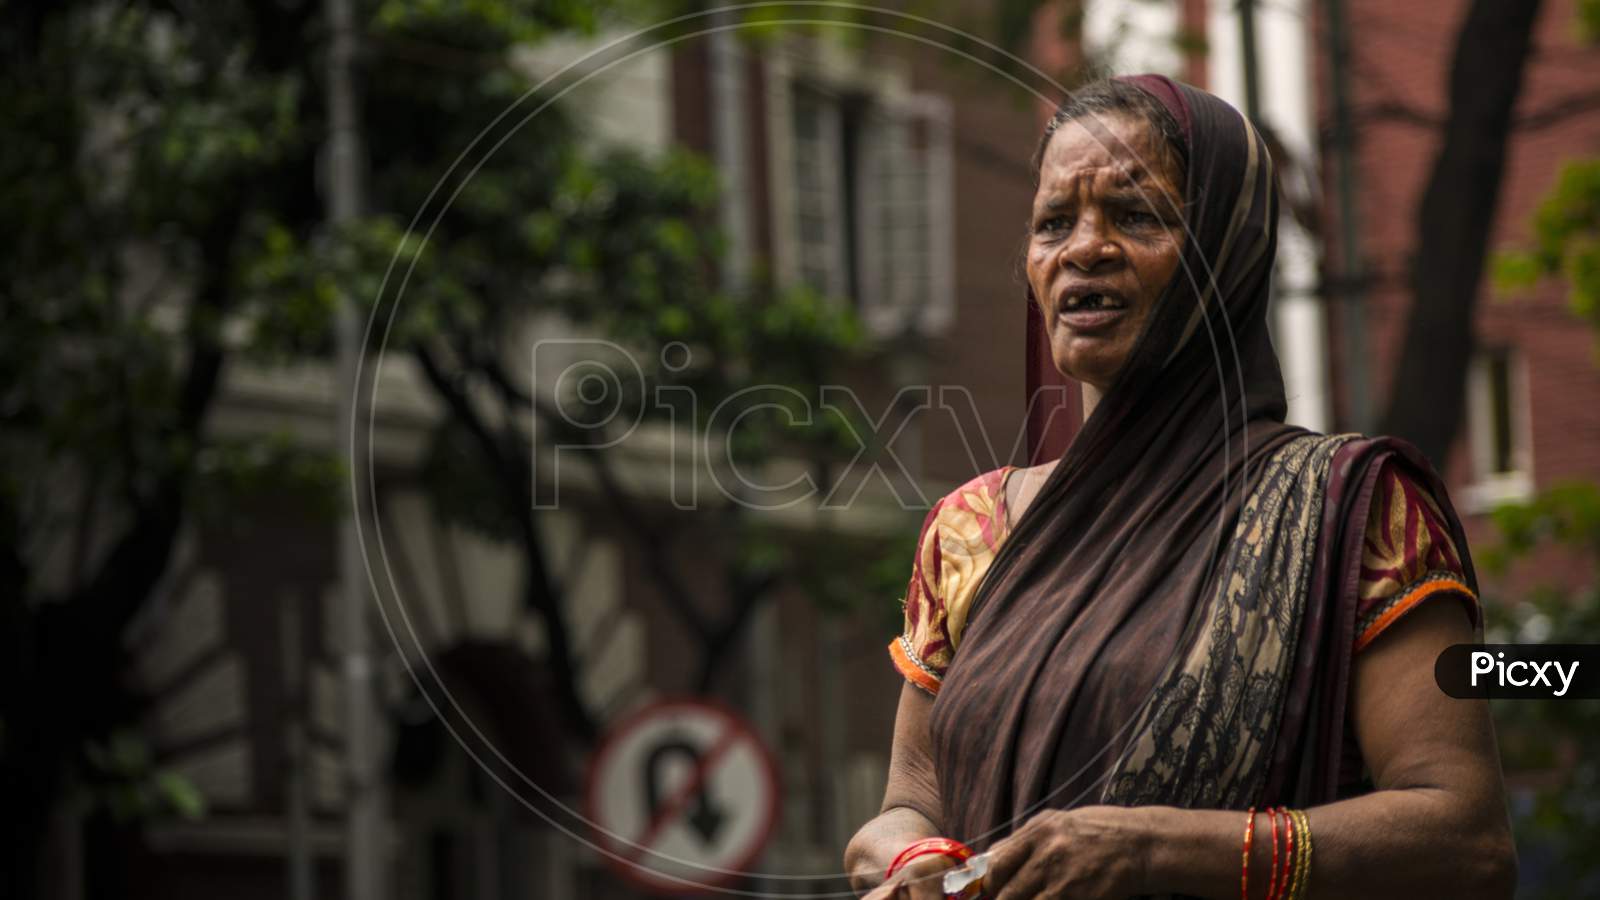 Masked face people walking on street in Kolkata Police Headquarters on 21st June 2020